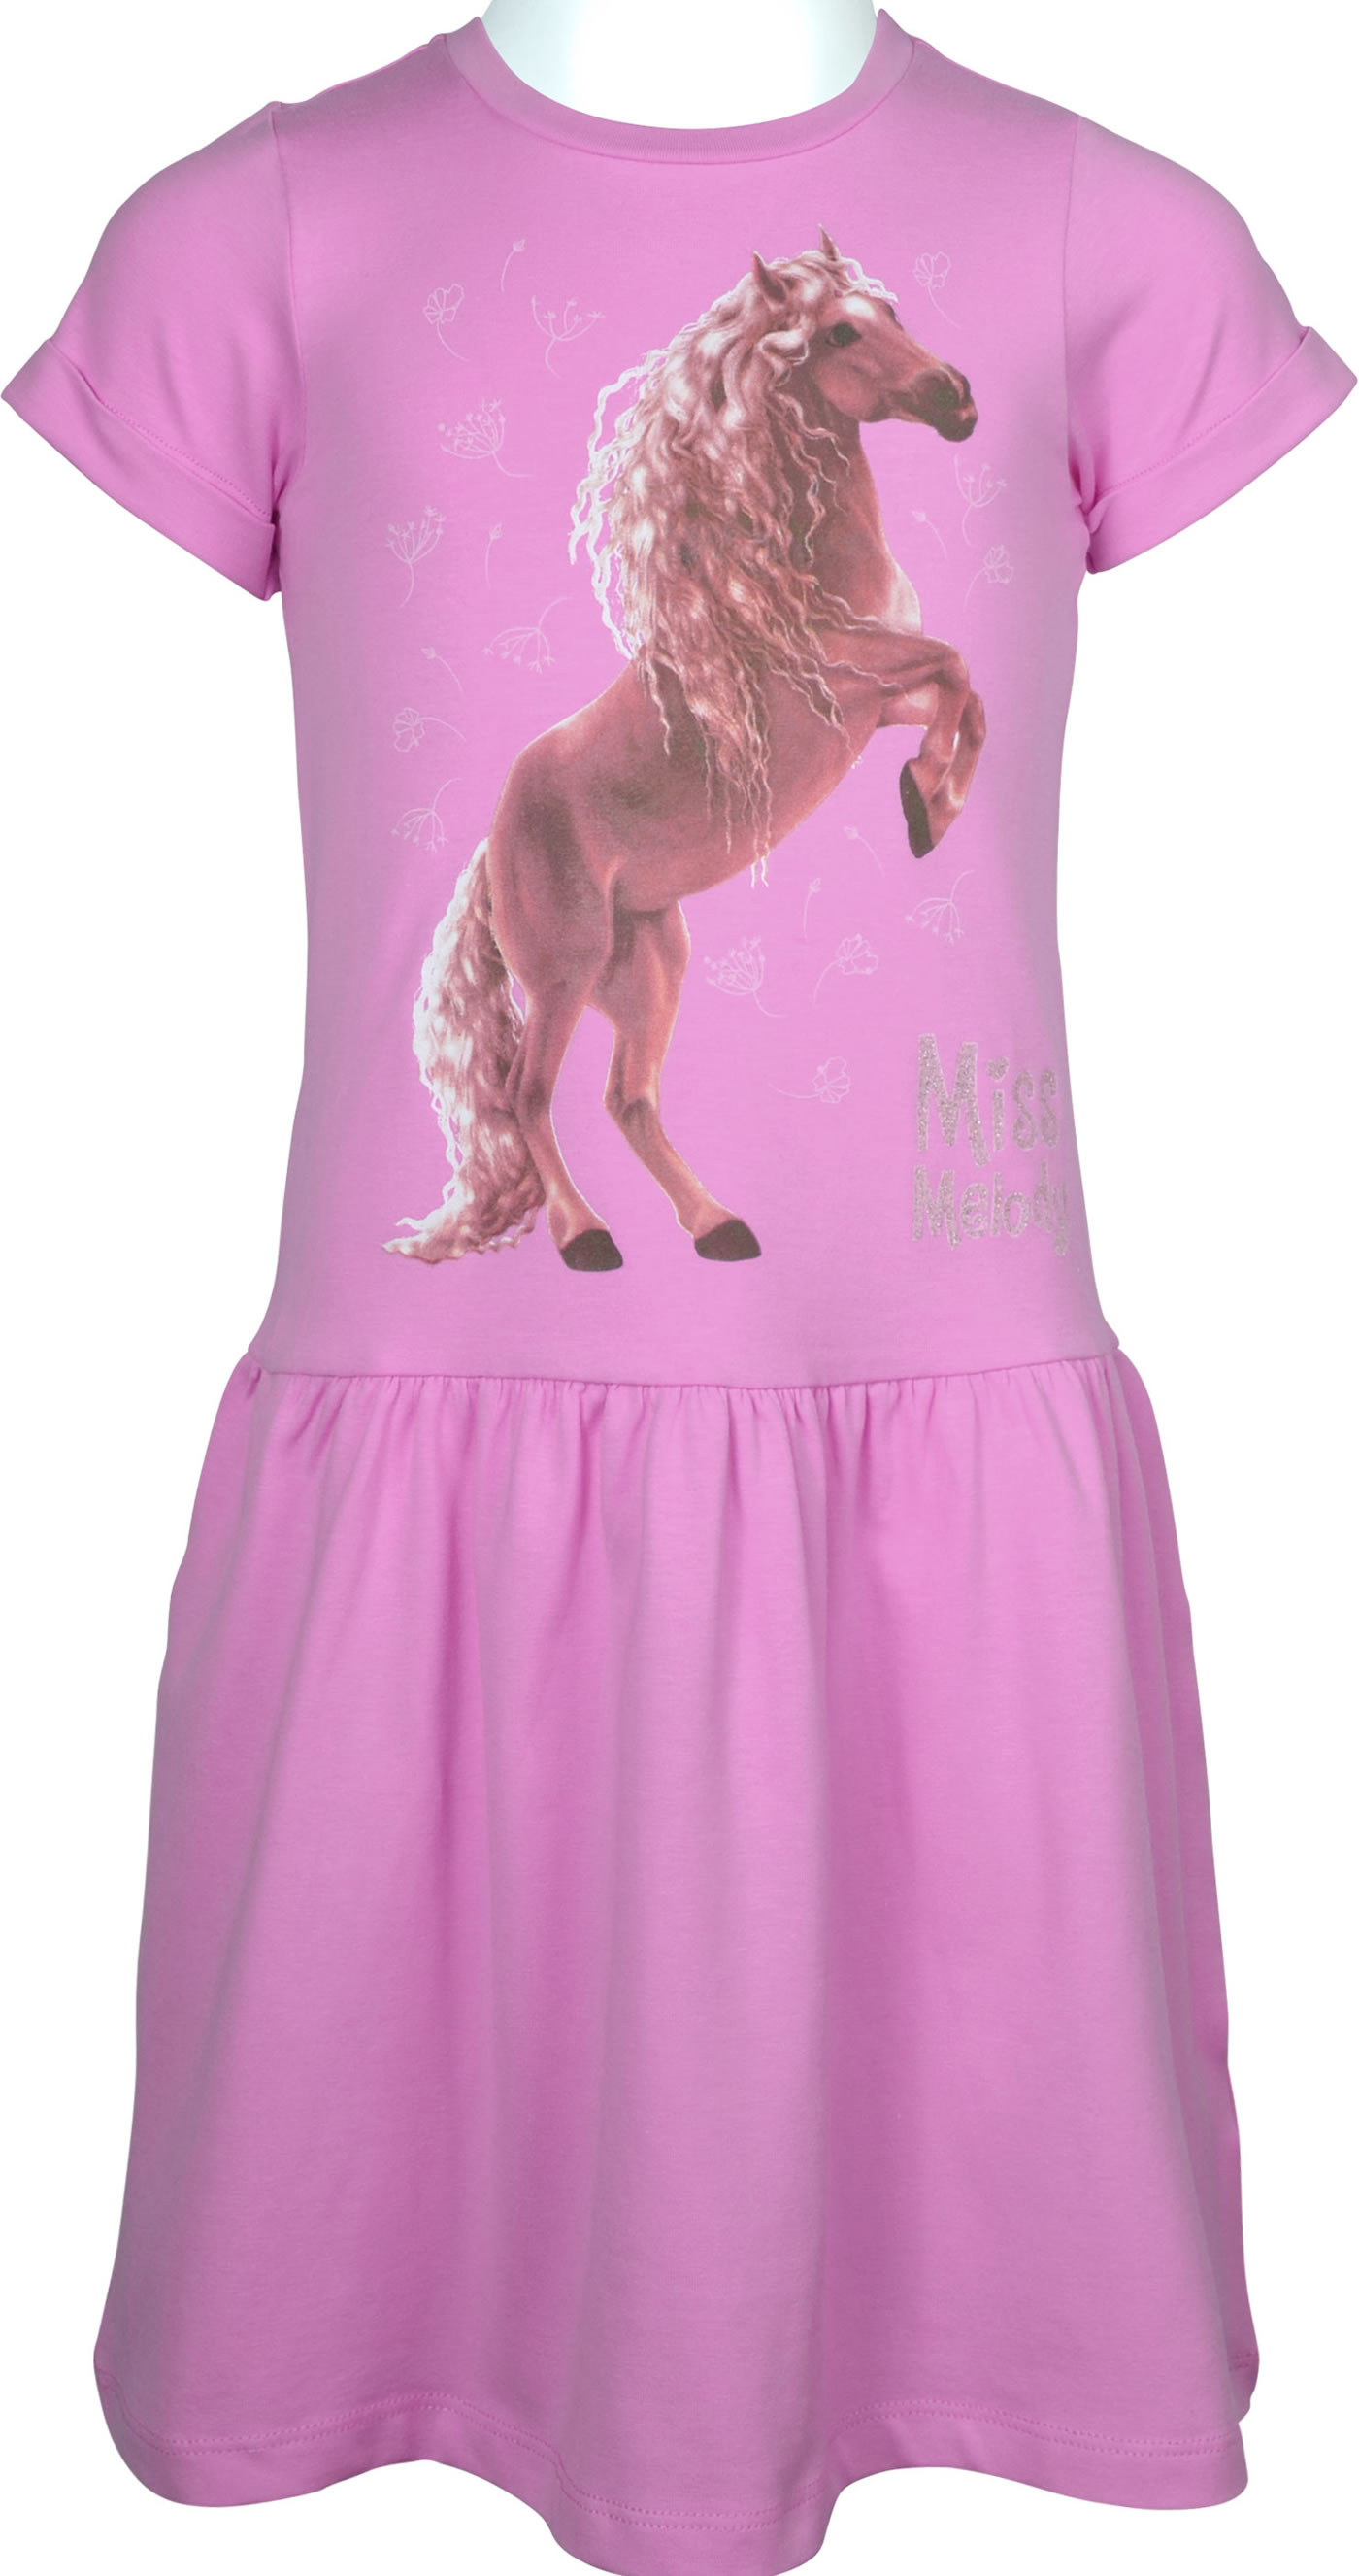 Miss Melody Dress at shop sleeve online sachet pink short